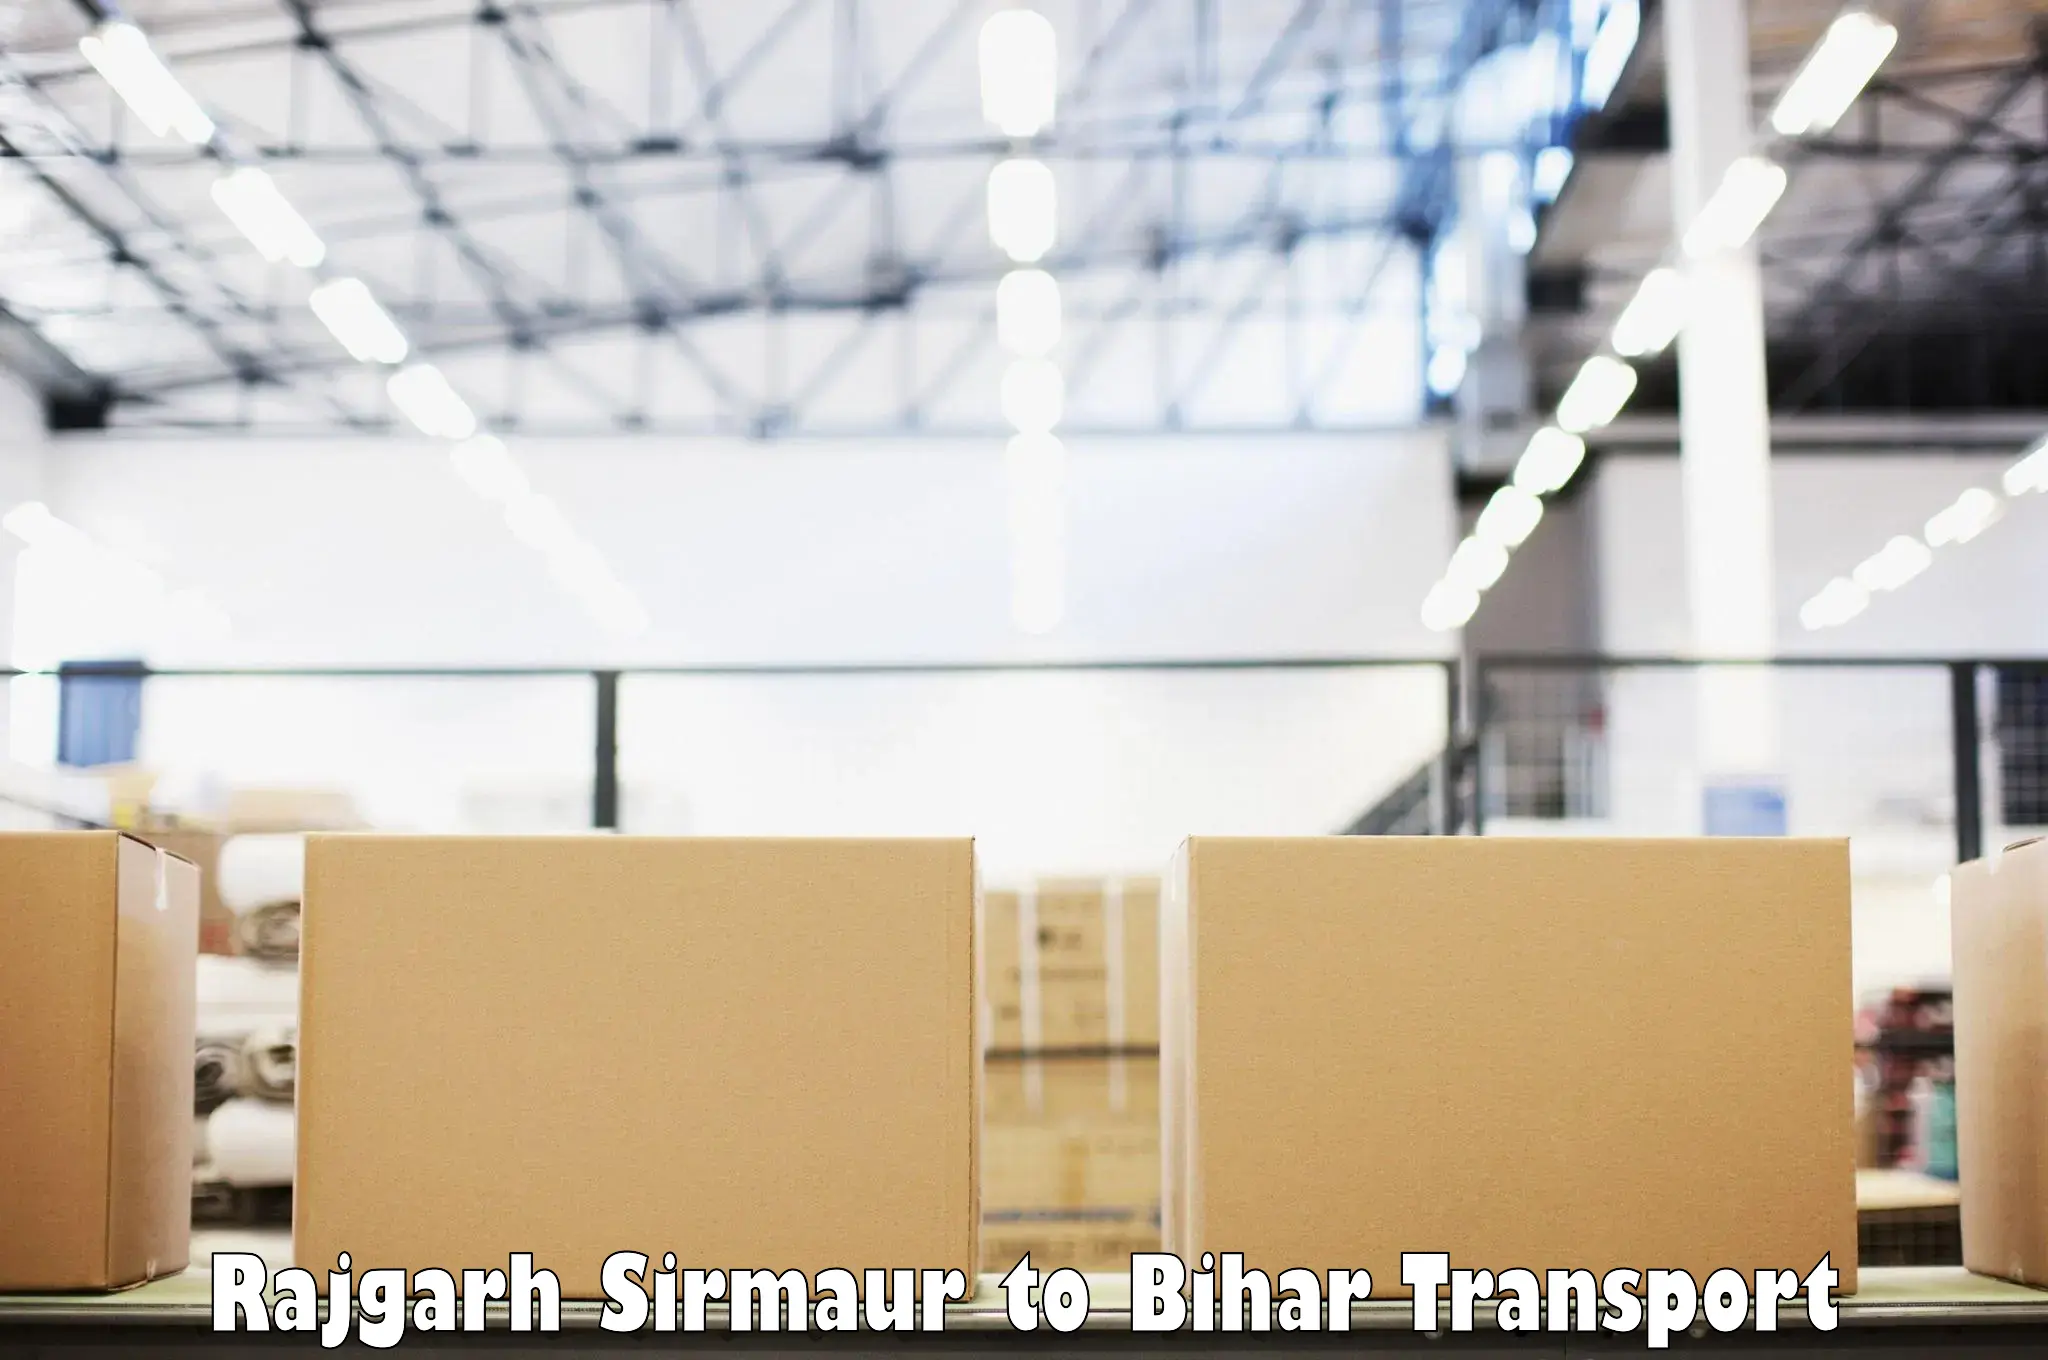 Transport shared services in Rajgarh Sirmaur to Jhanjharpur